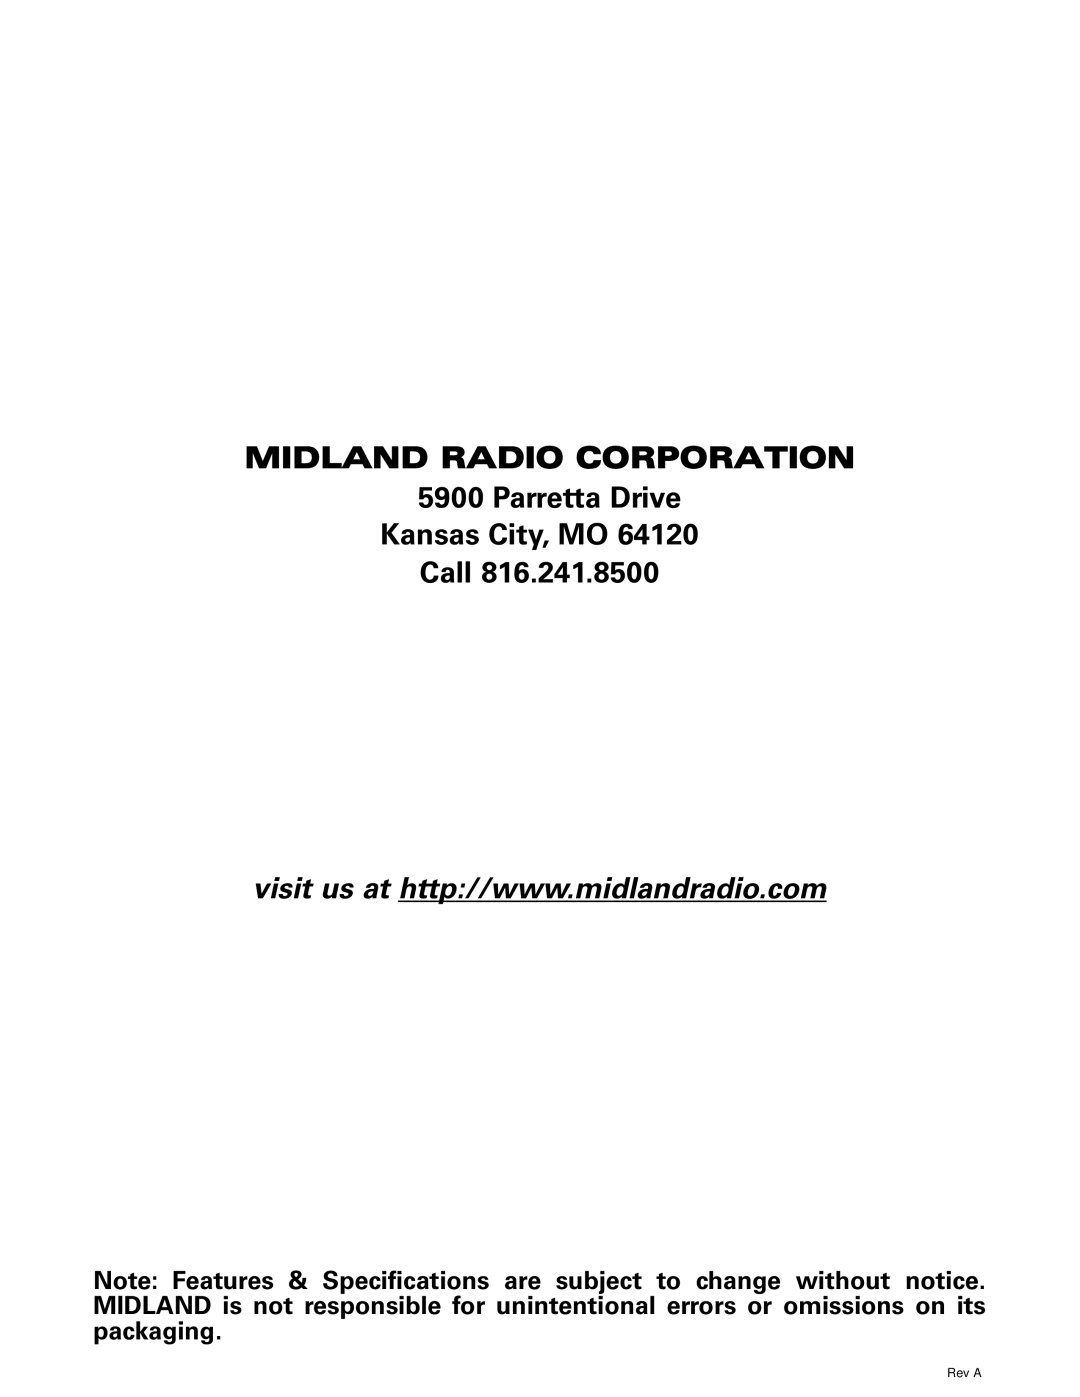 Midland Radio LXT112 Series owner manual MIDLAND RADIO CORPORATION 5900 Parretta Drive Kansas City, MO Call, Rev A 